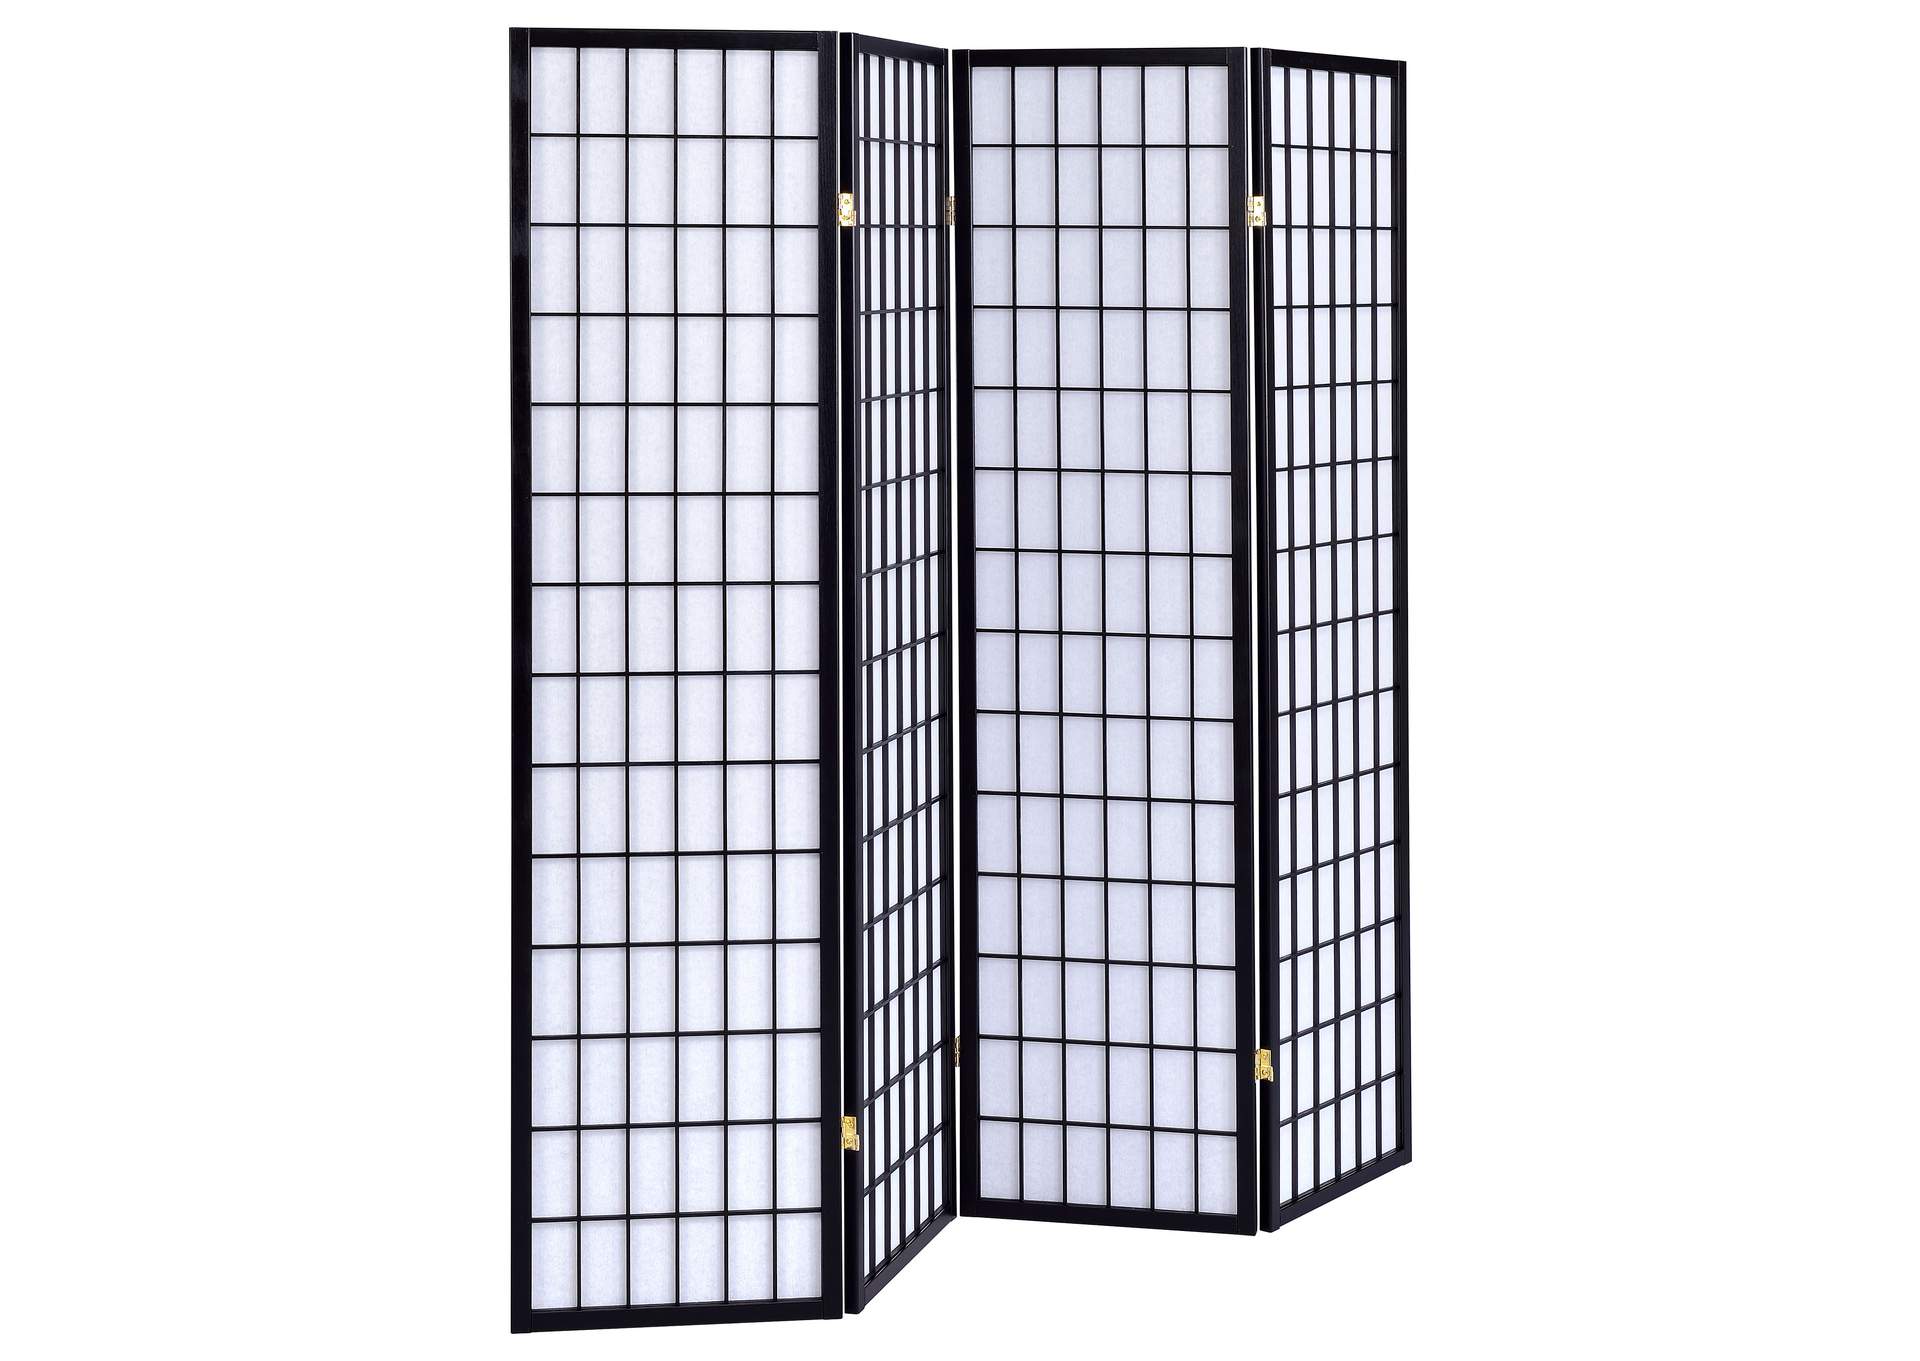 Roberto 4-panel Folding Screen Black and White,Coaster Furniture